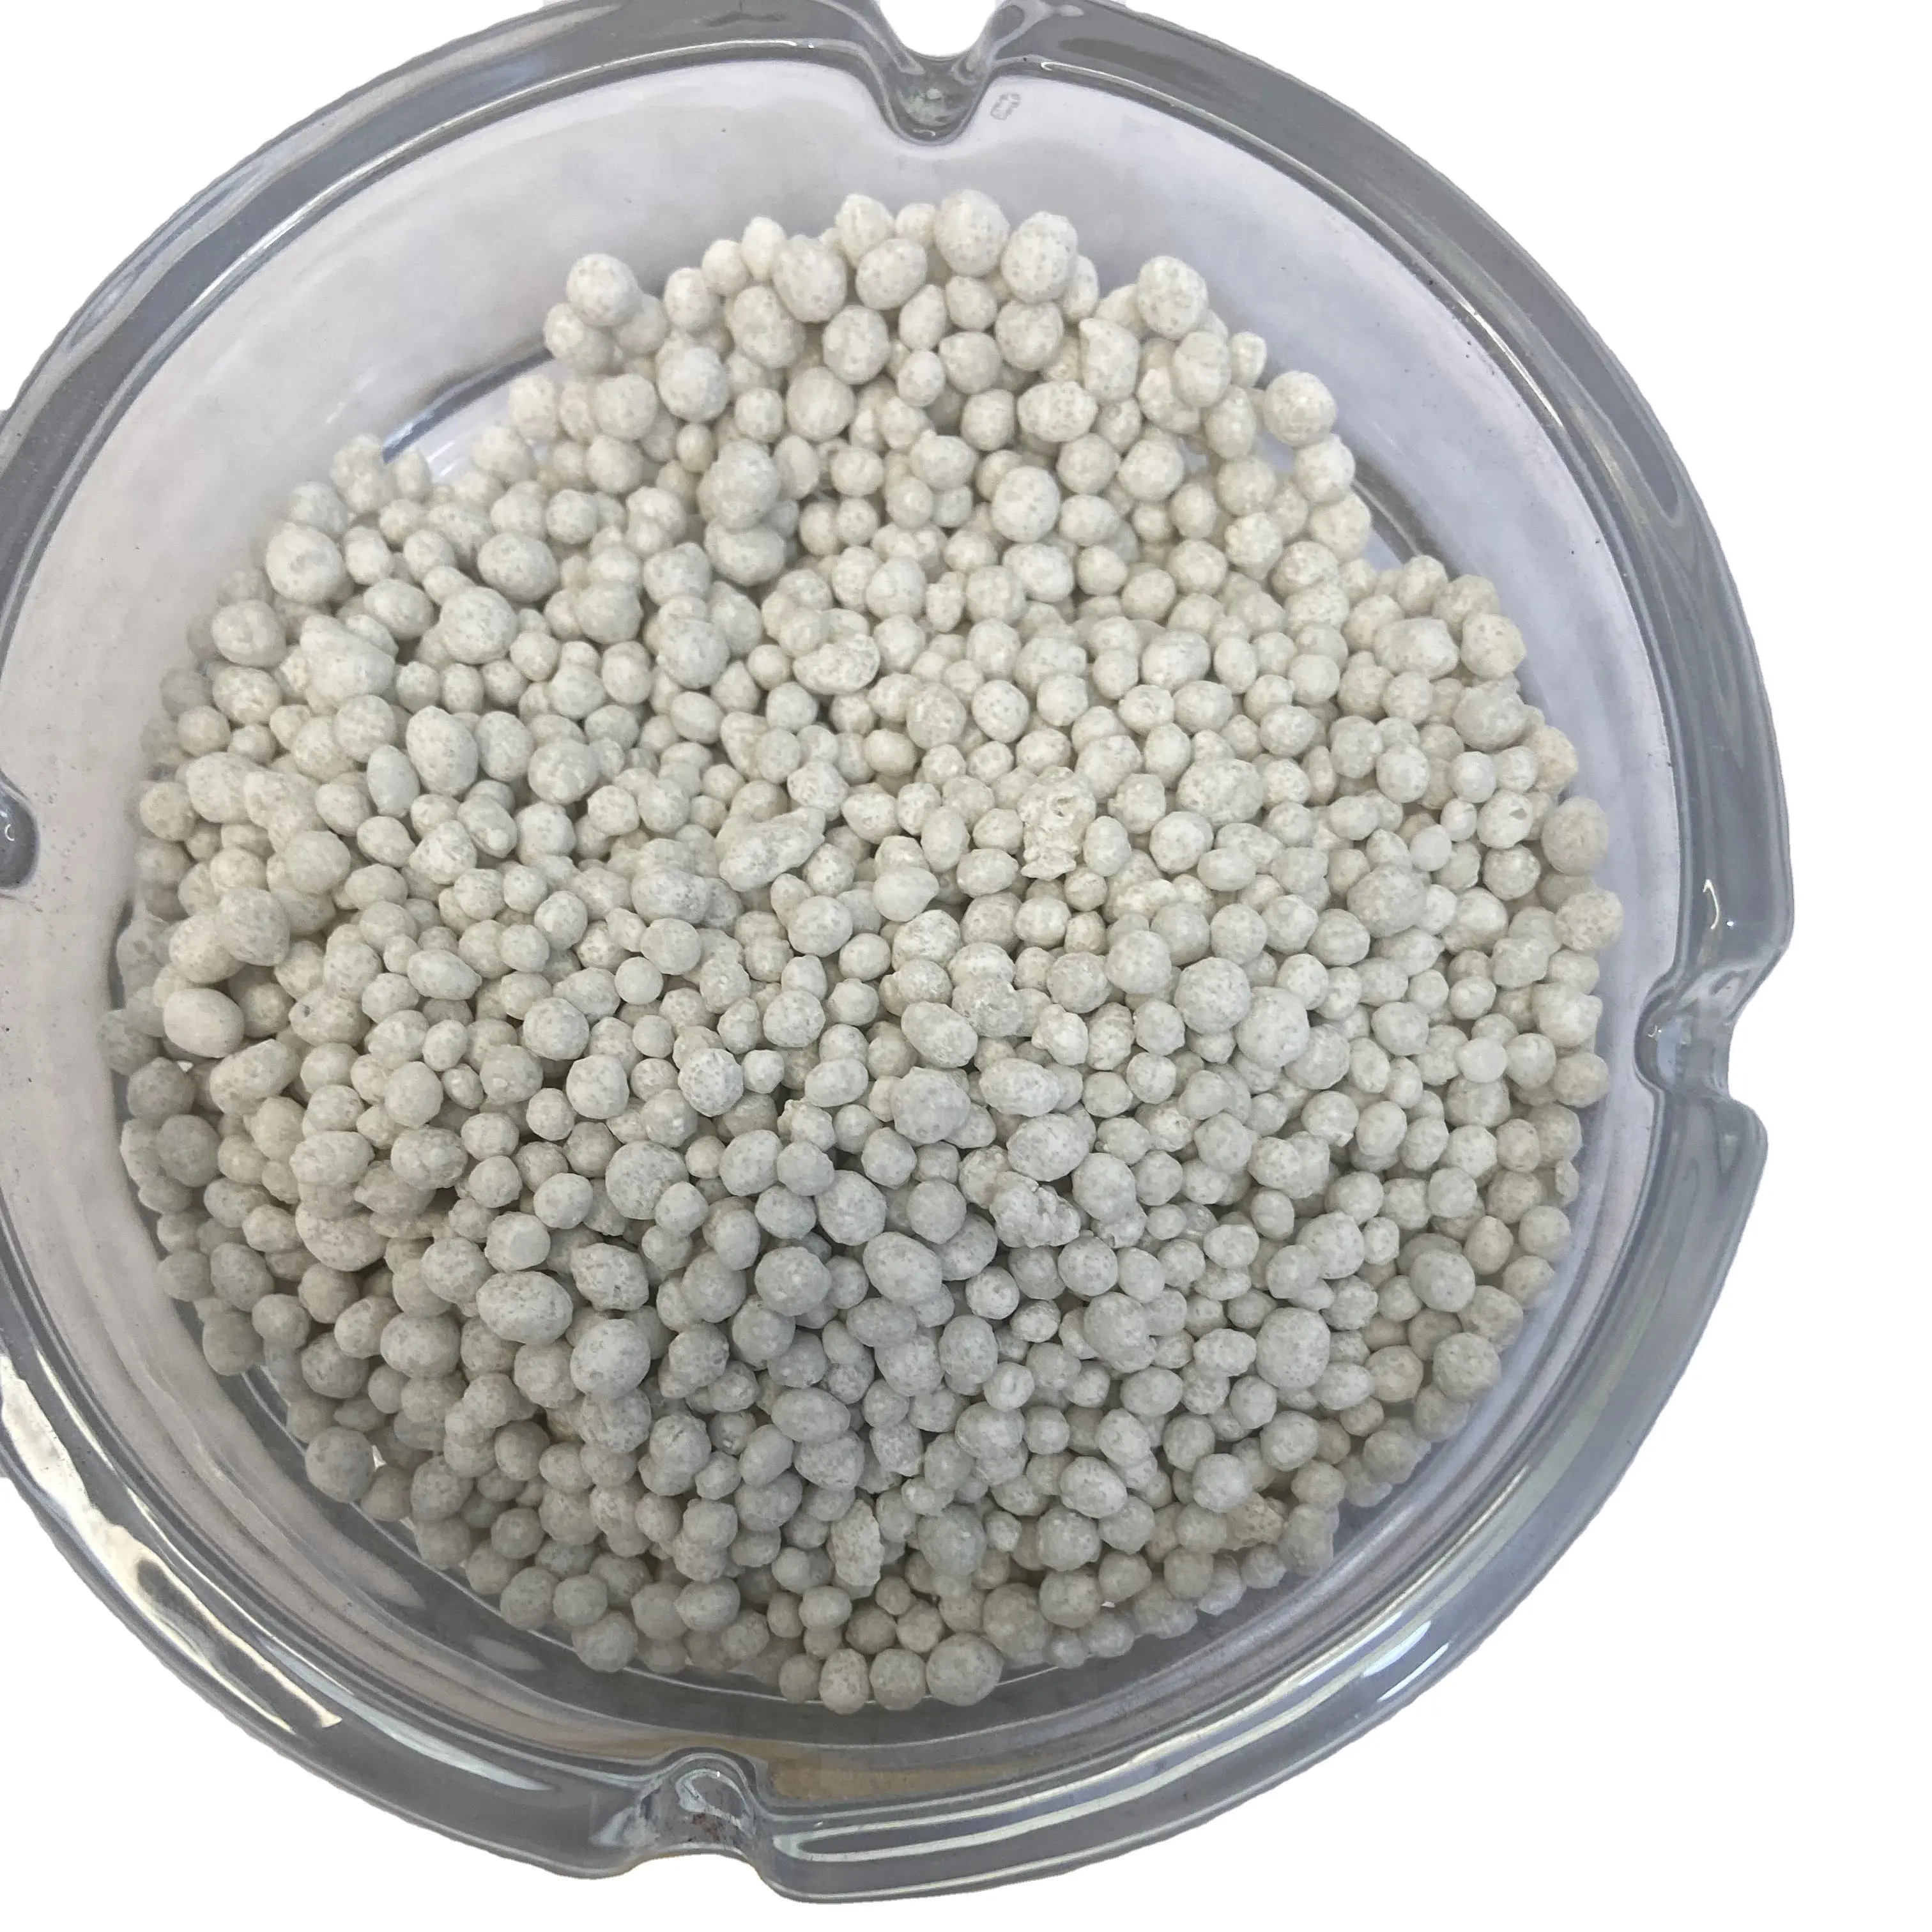 Fertilizante composto granulado NPK 17-17-17 100% puro da China Agroquímicos agrícolas de fábrica para uso agrícola